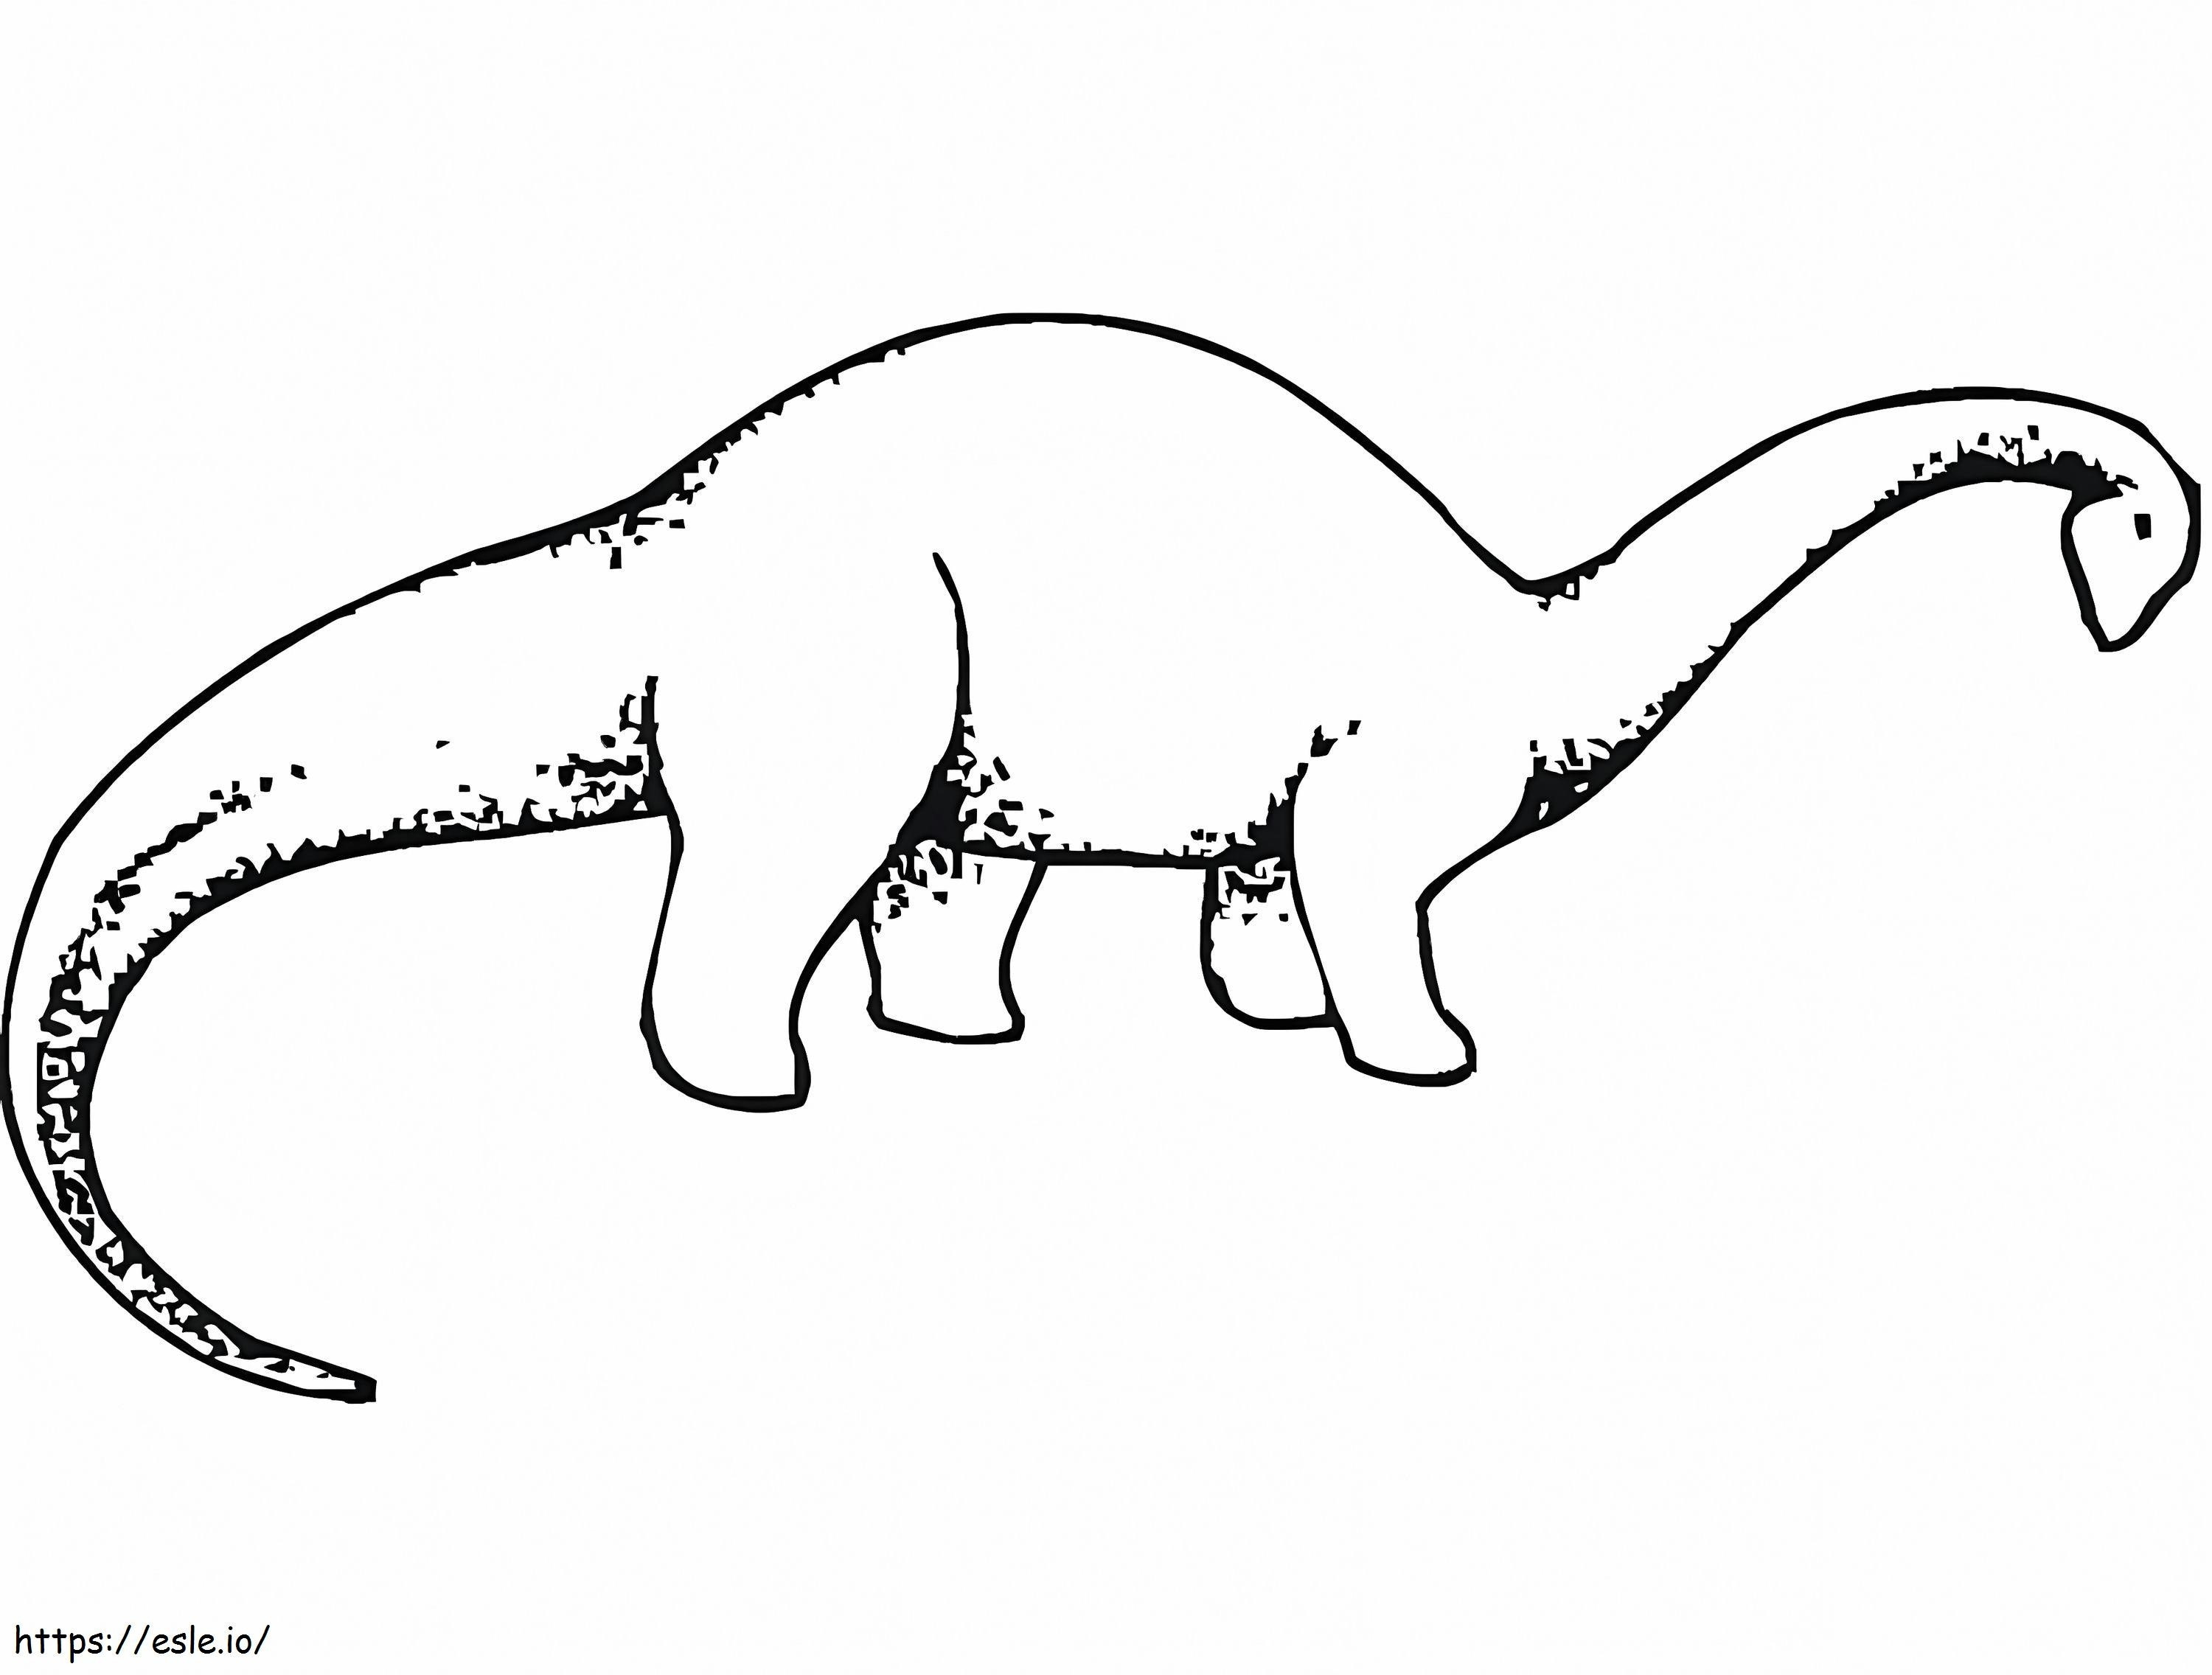 Brachiozaur 1 kolorowanka